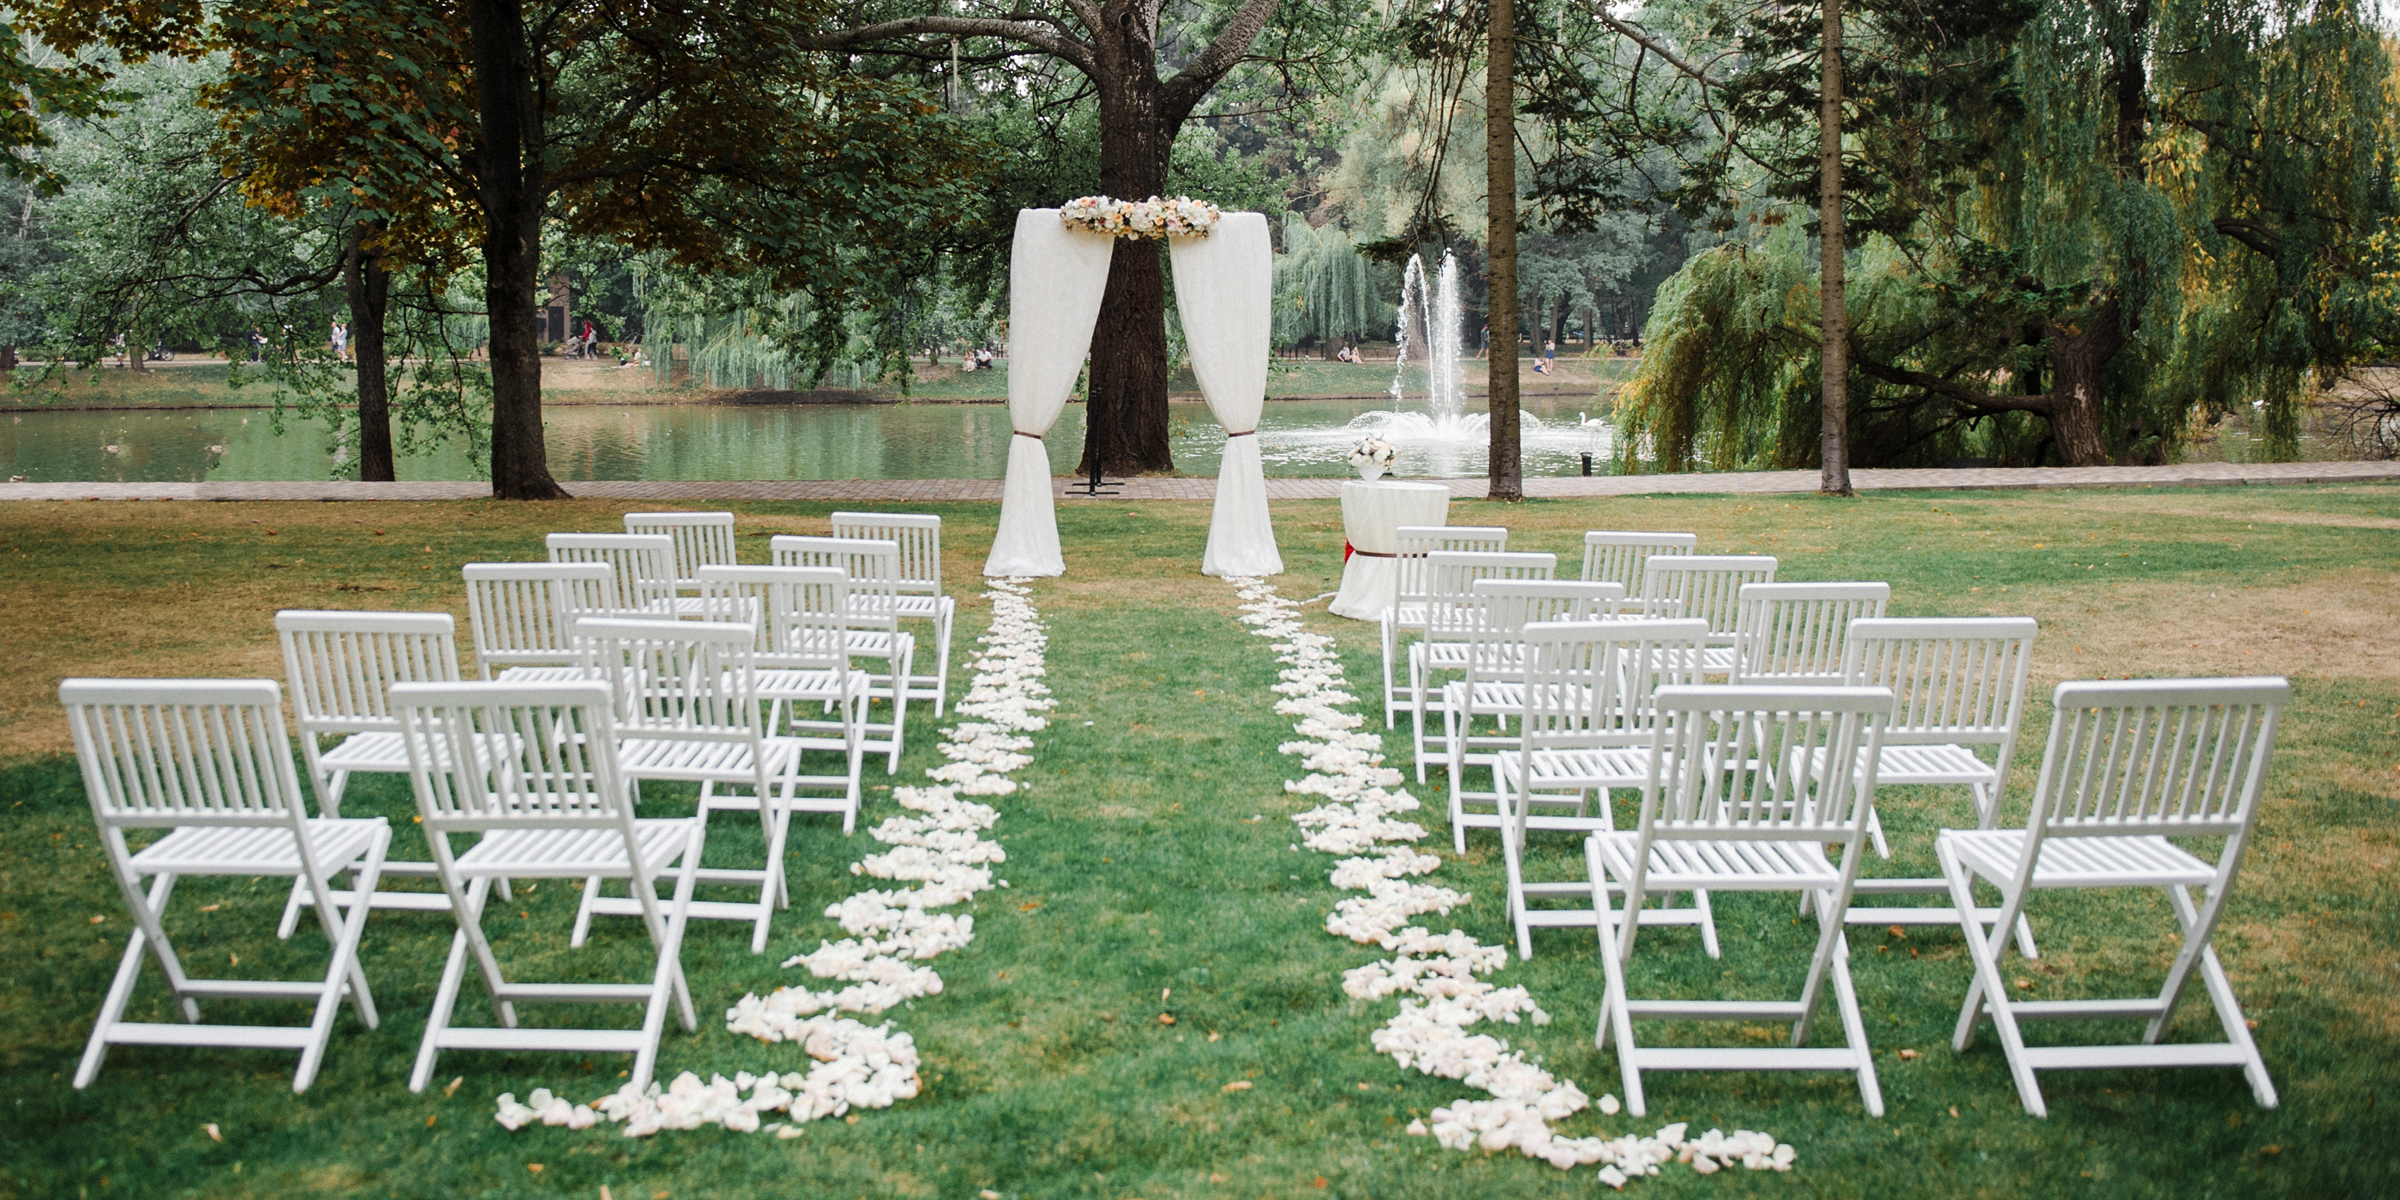 Wedding venue | Source: Shutterstock